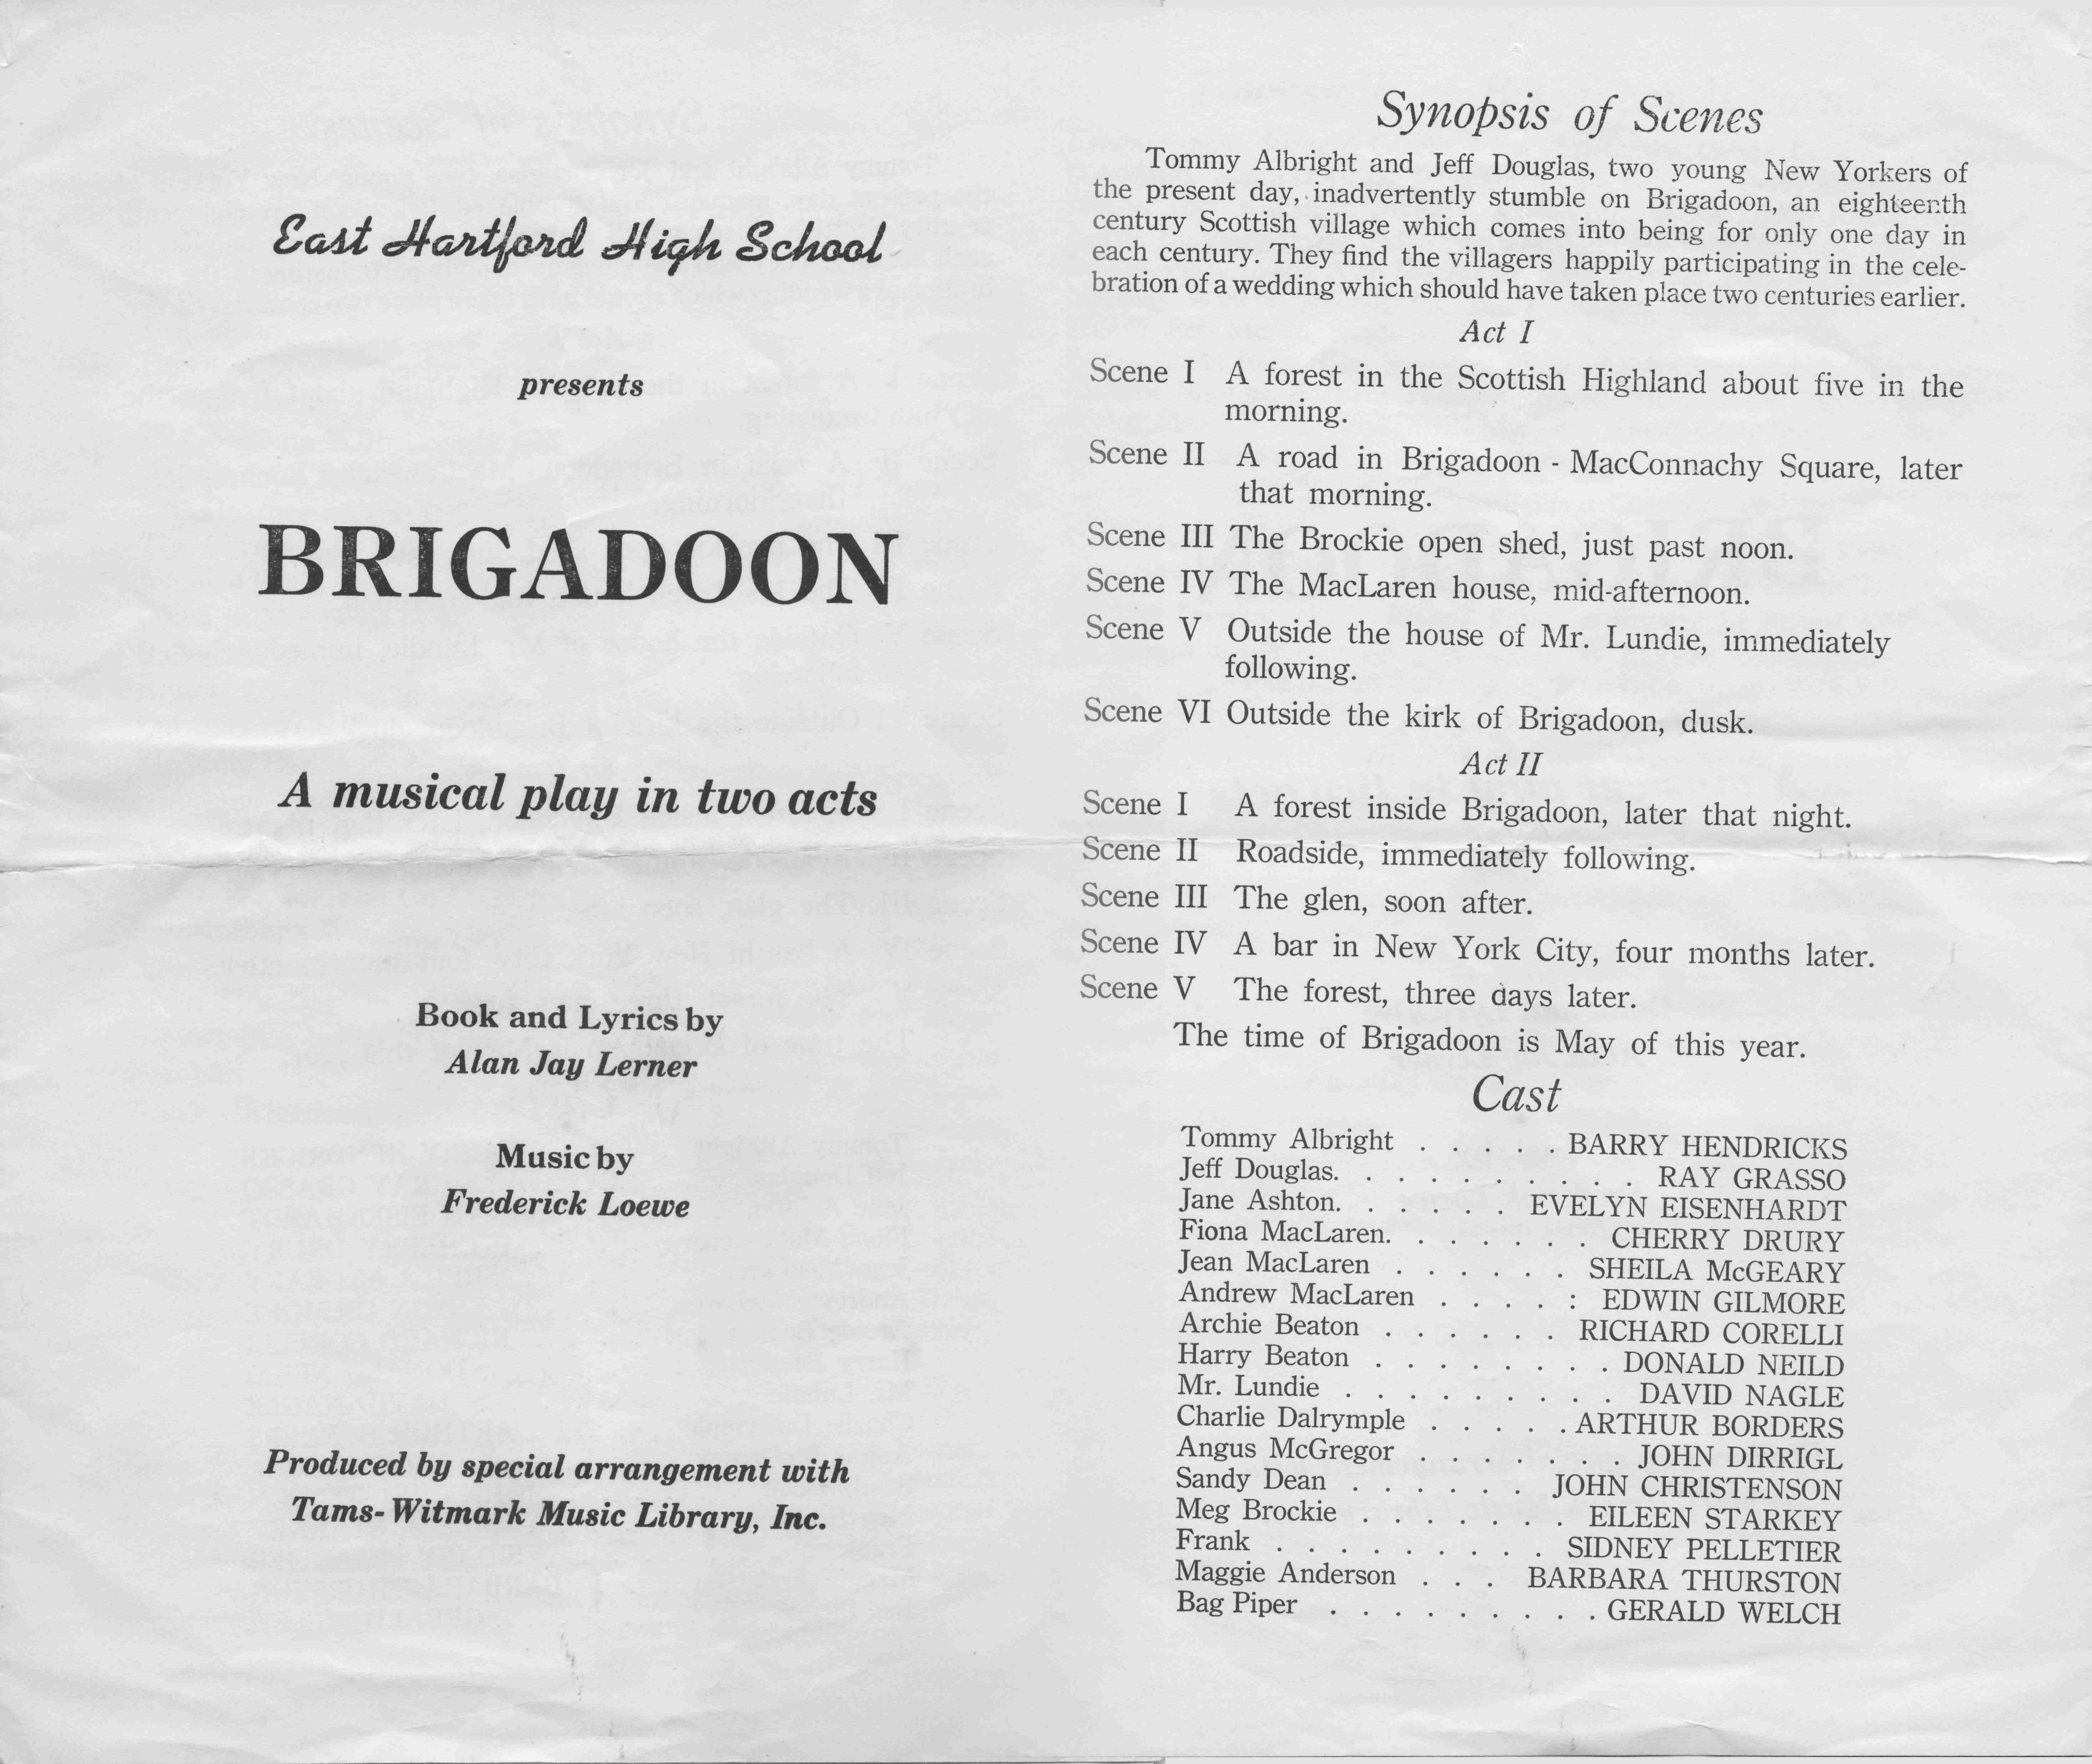 Playbill for Brigadoon